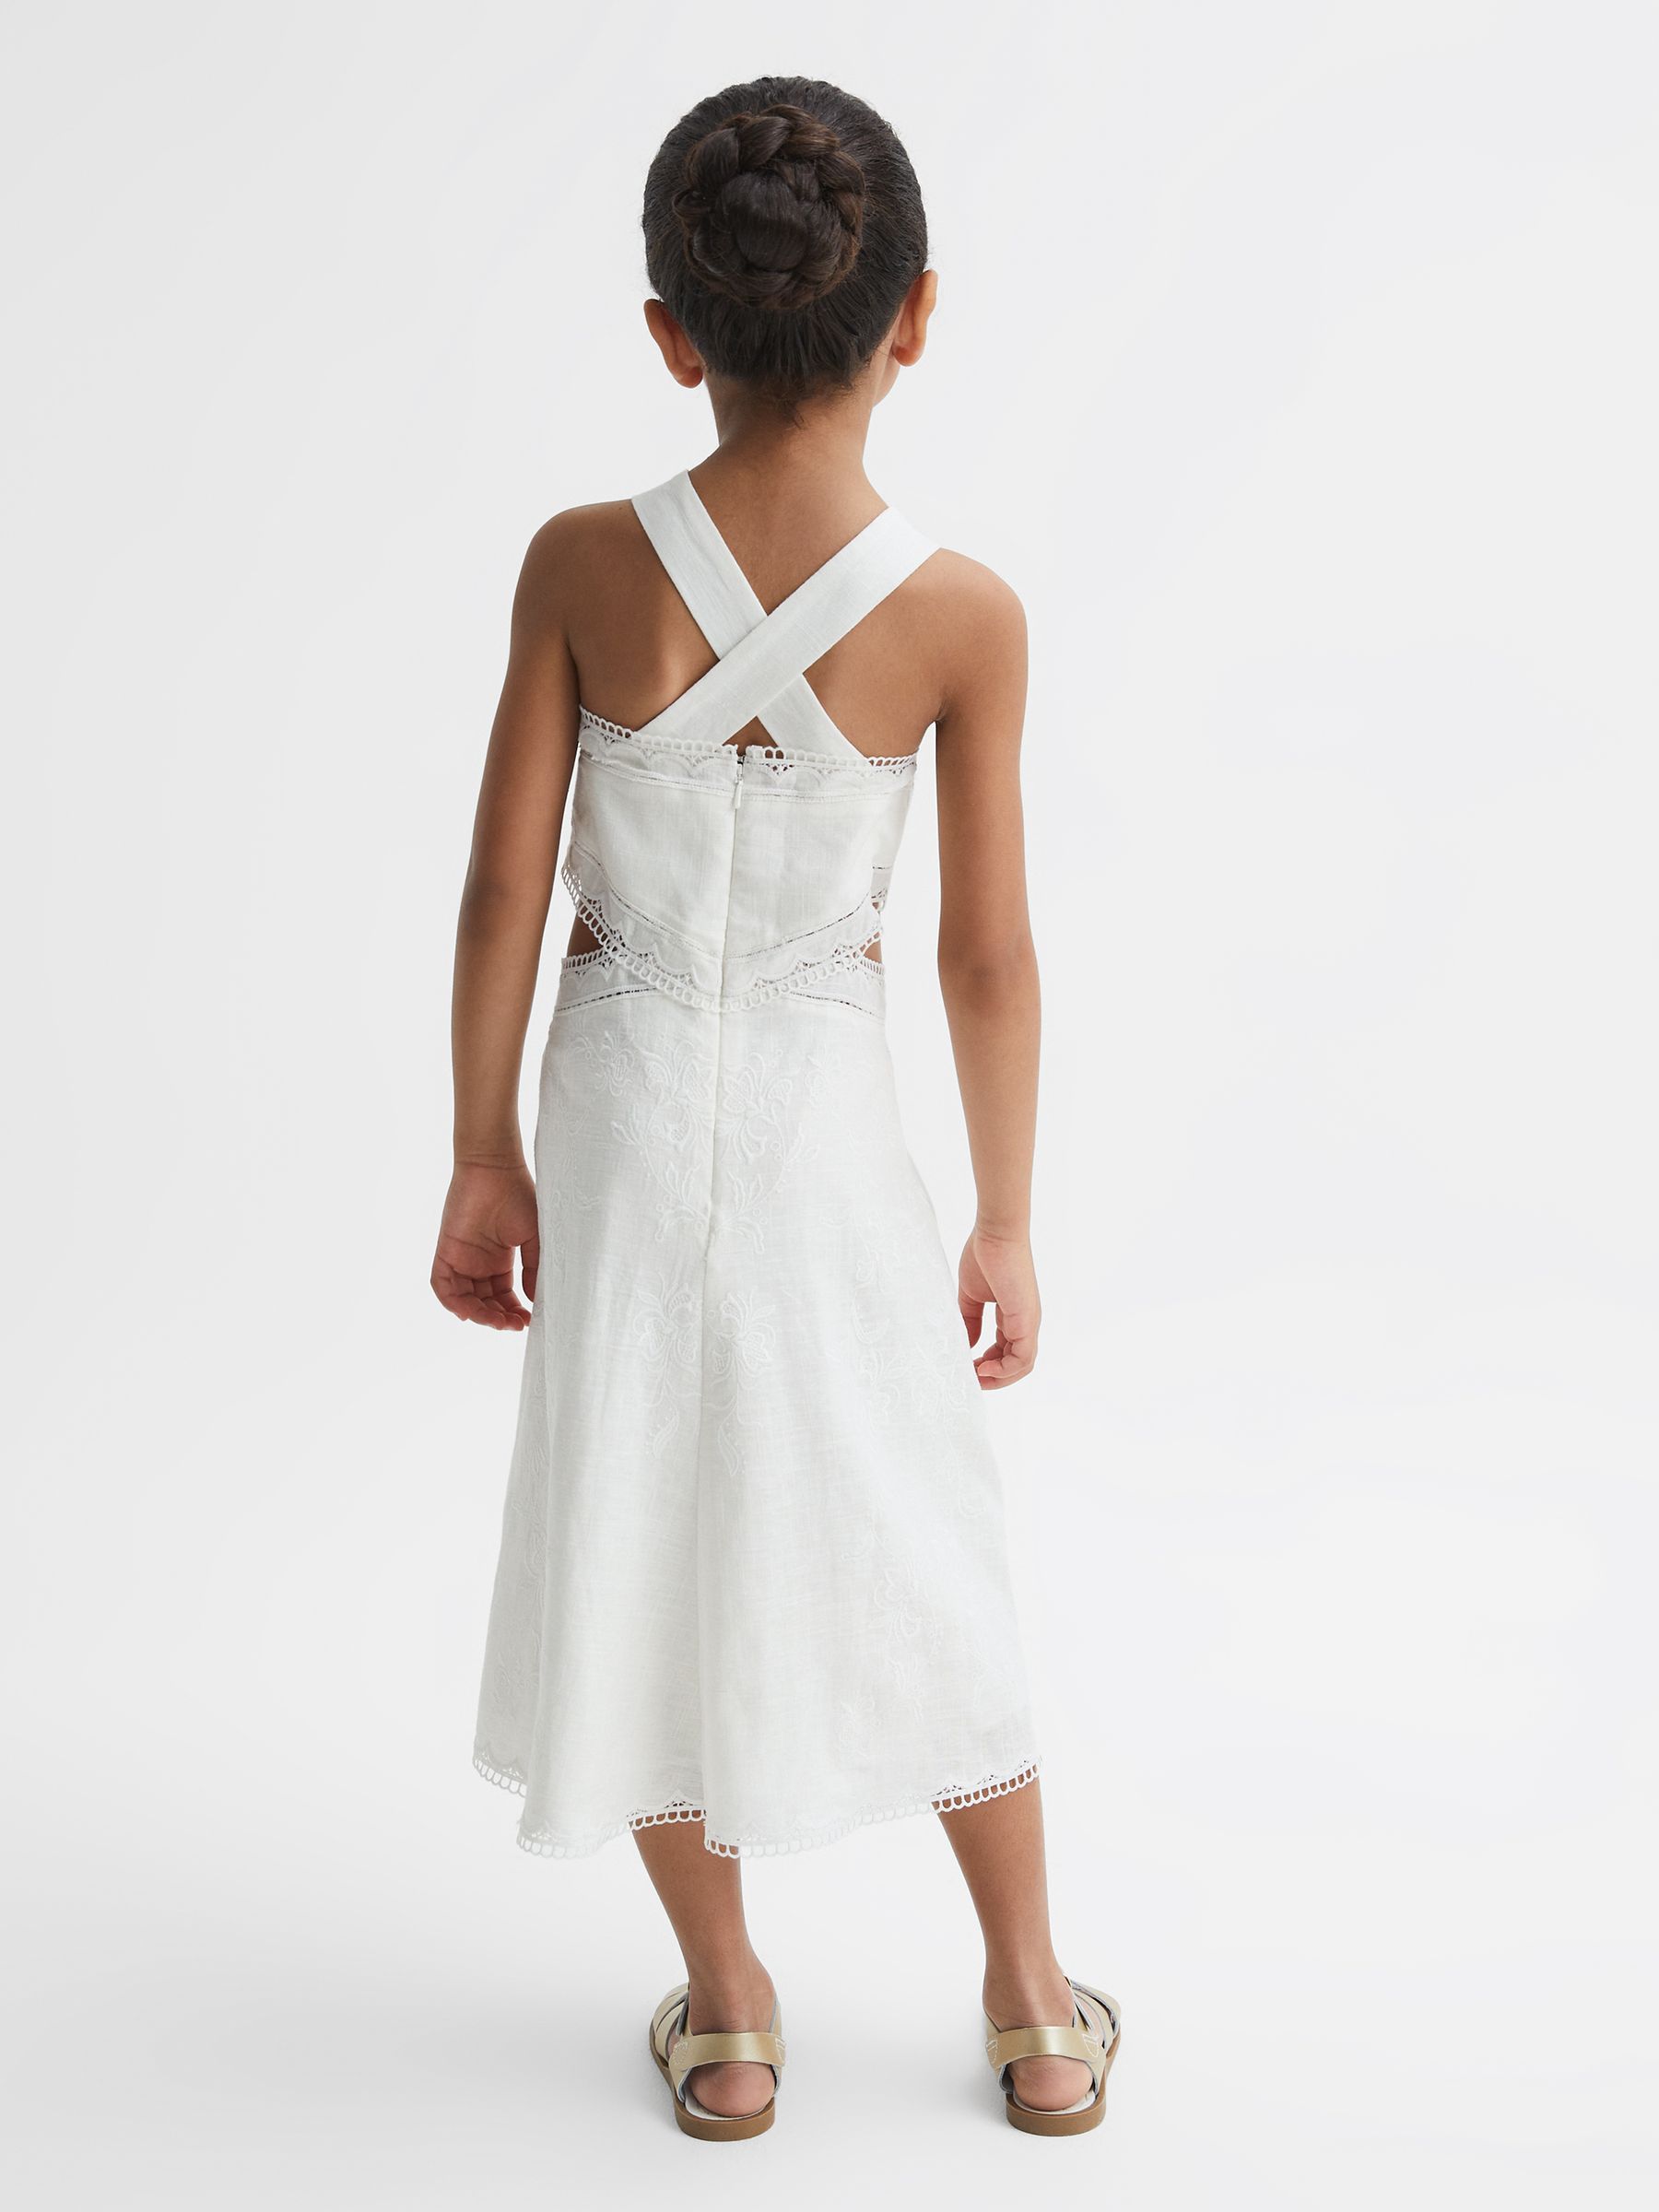 Reiss Louisa Embroidered Dress | REISS USA